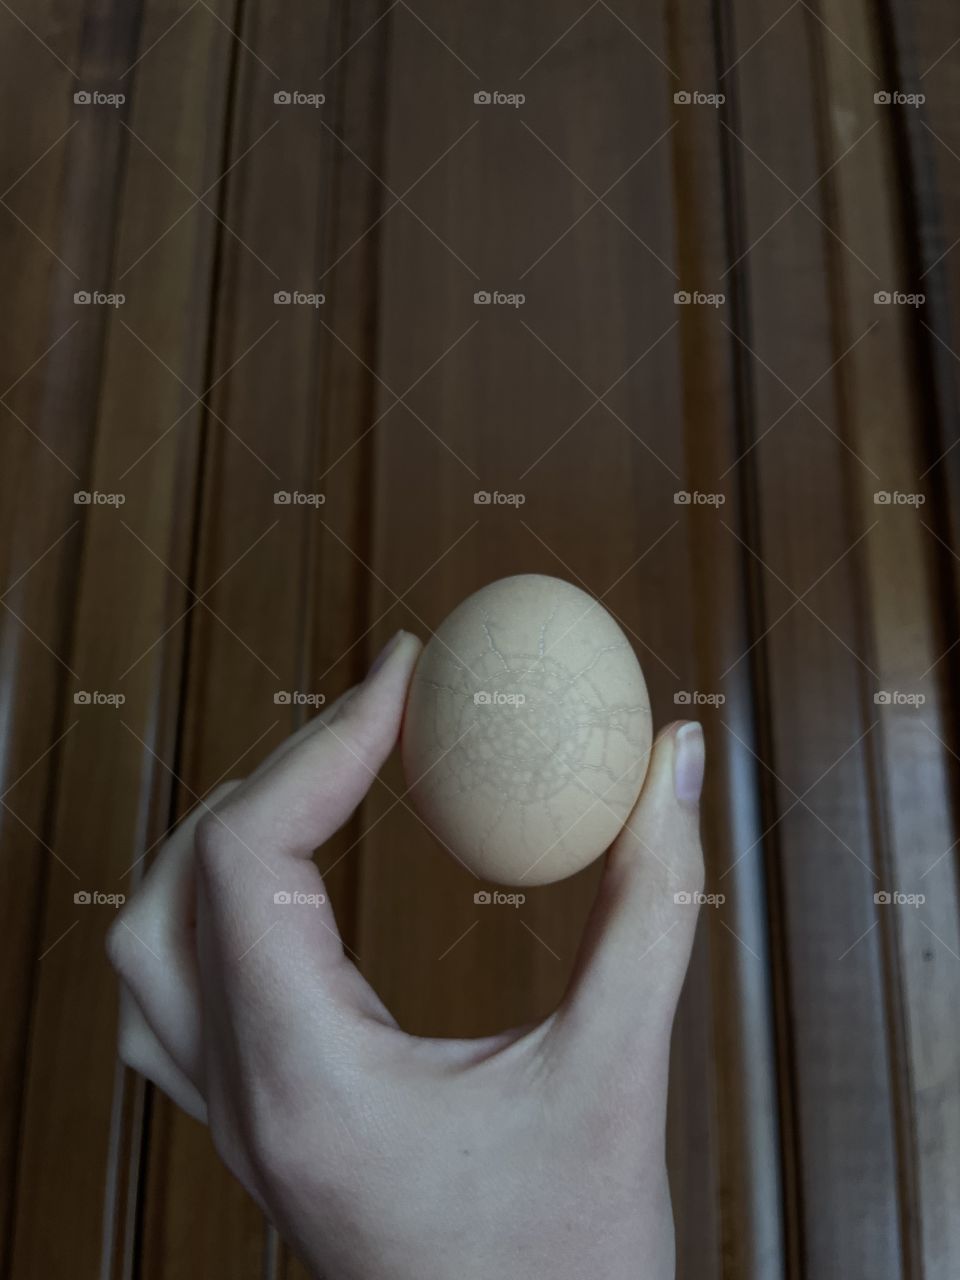 An oddly cracked egg 